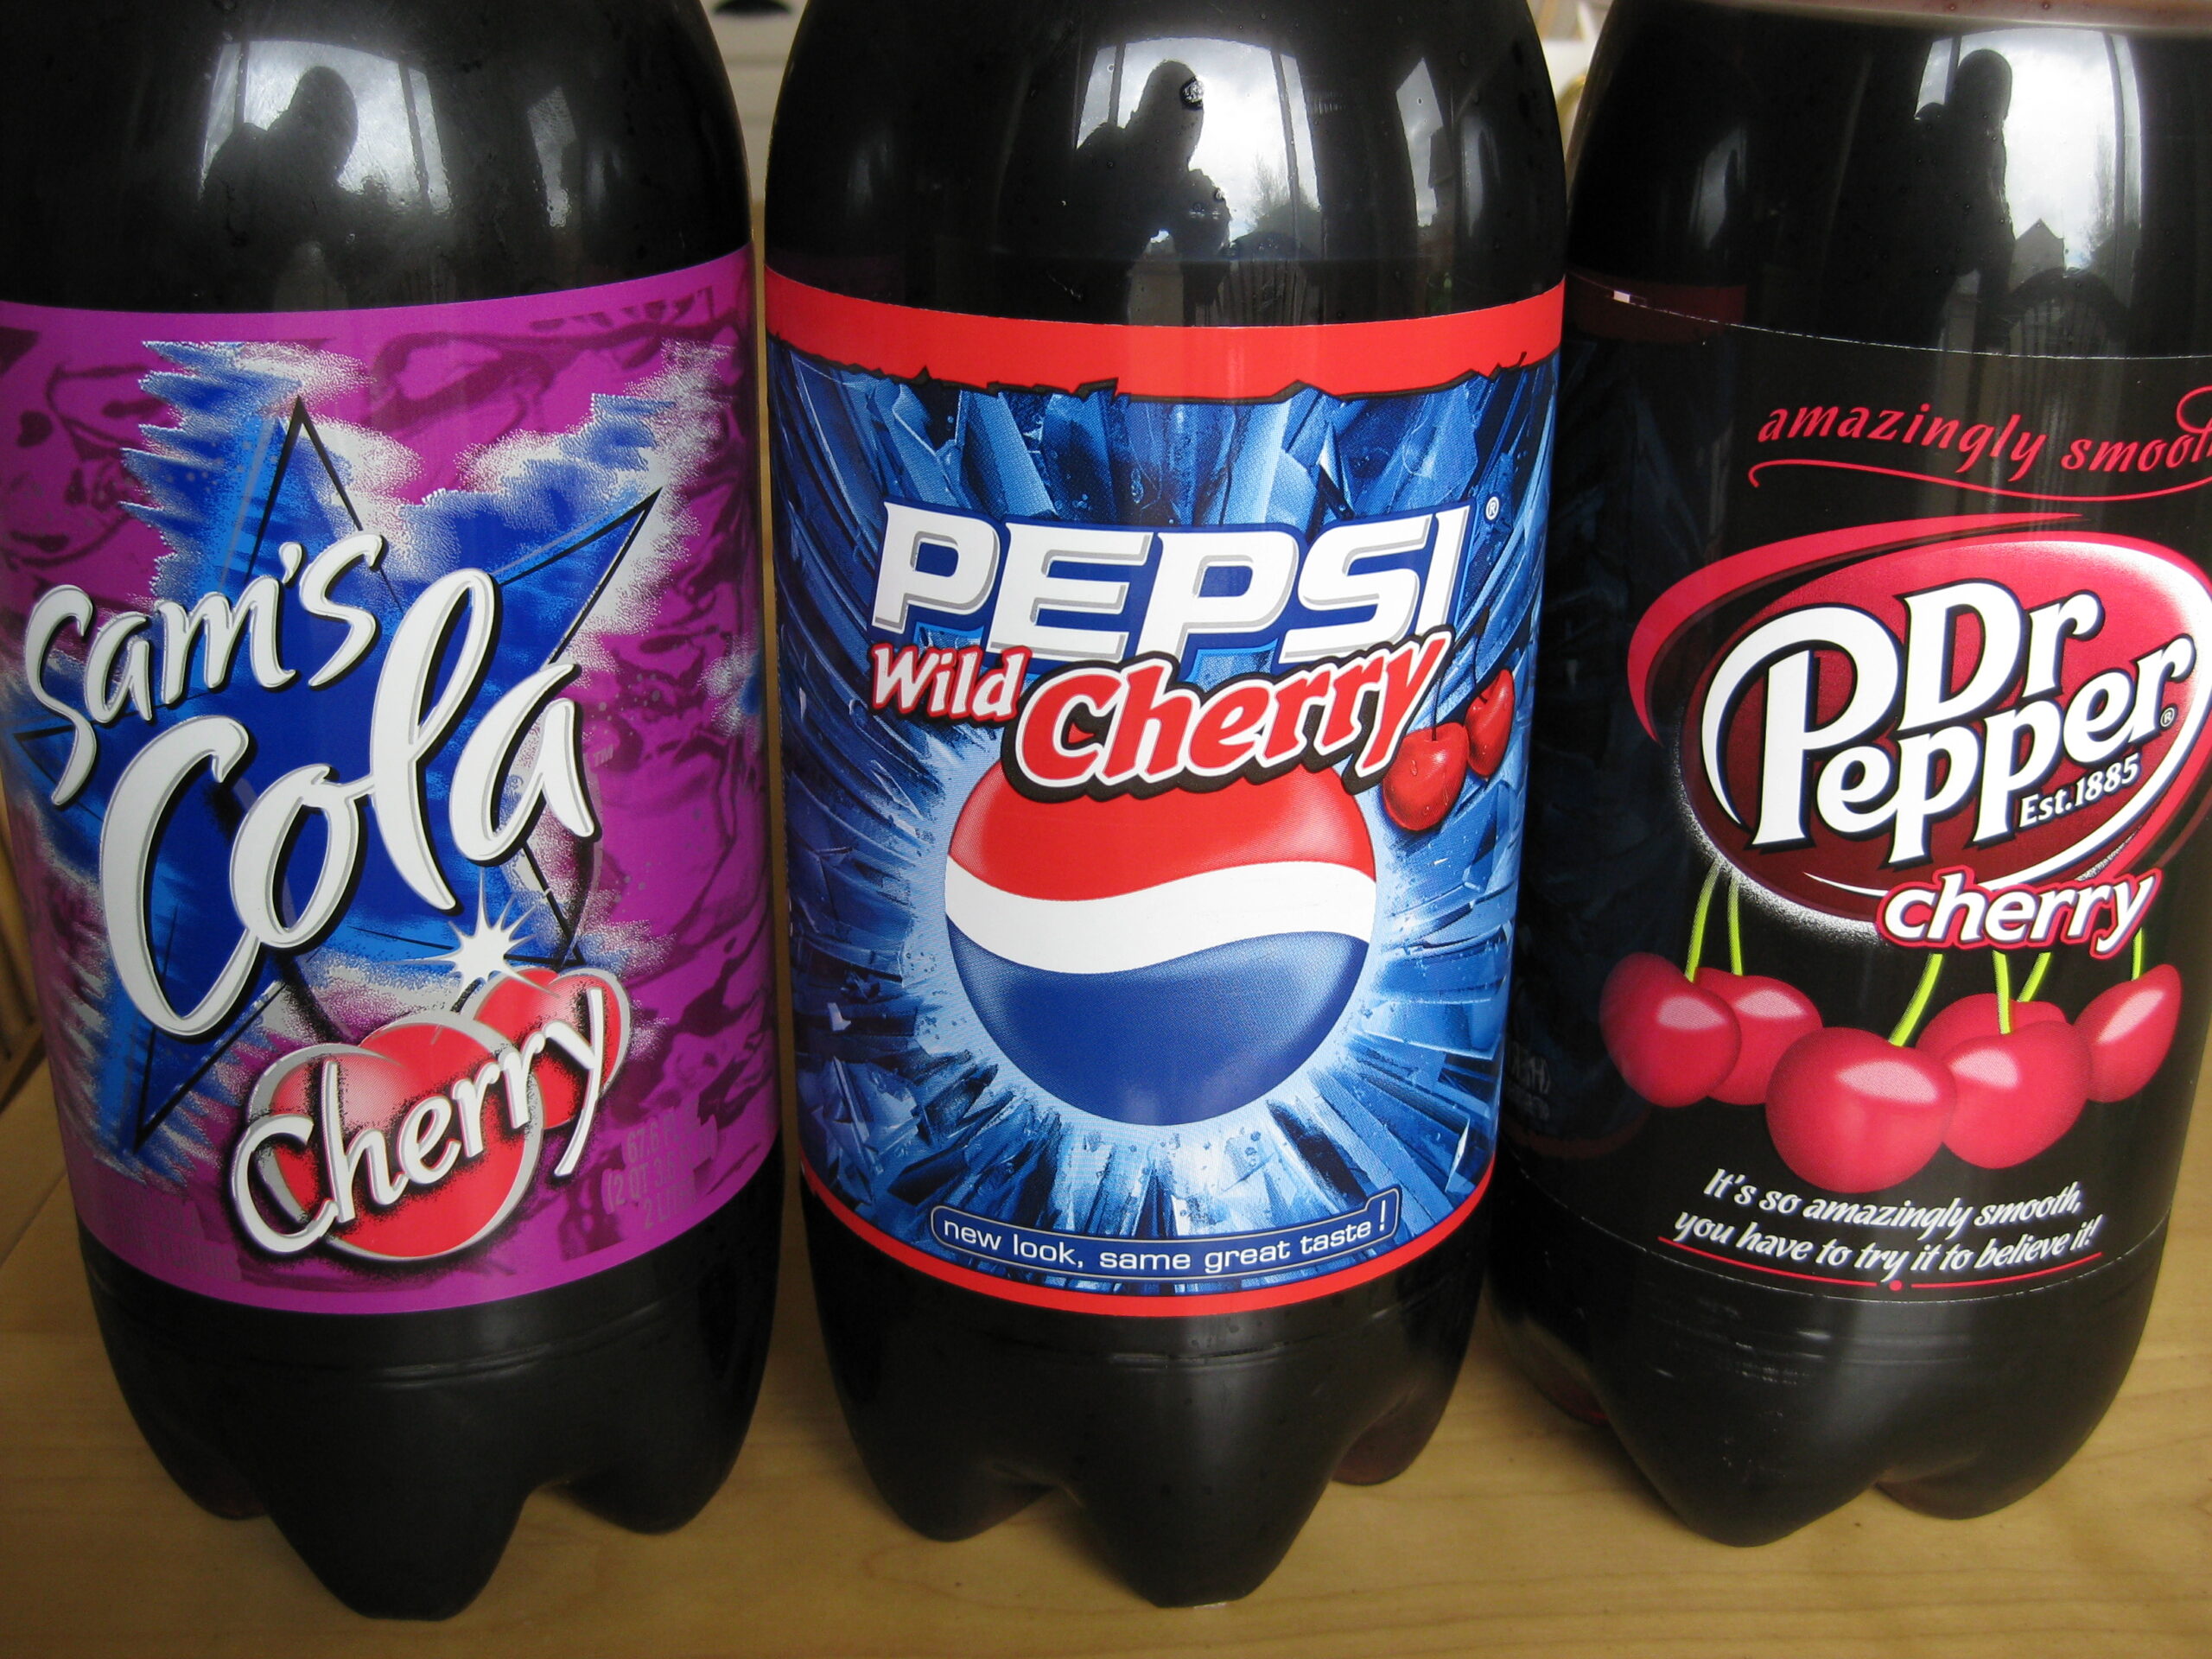 Cherry Coke vs Pepsi Wild cherry